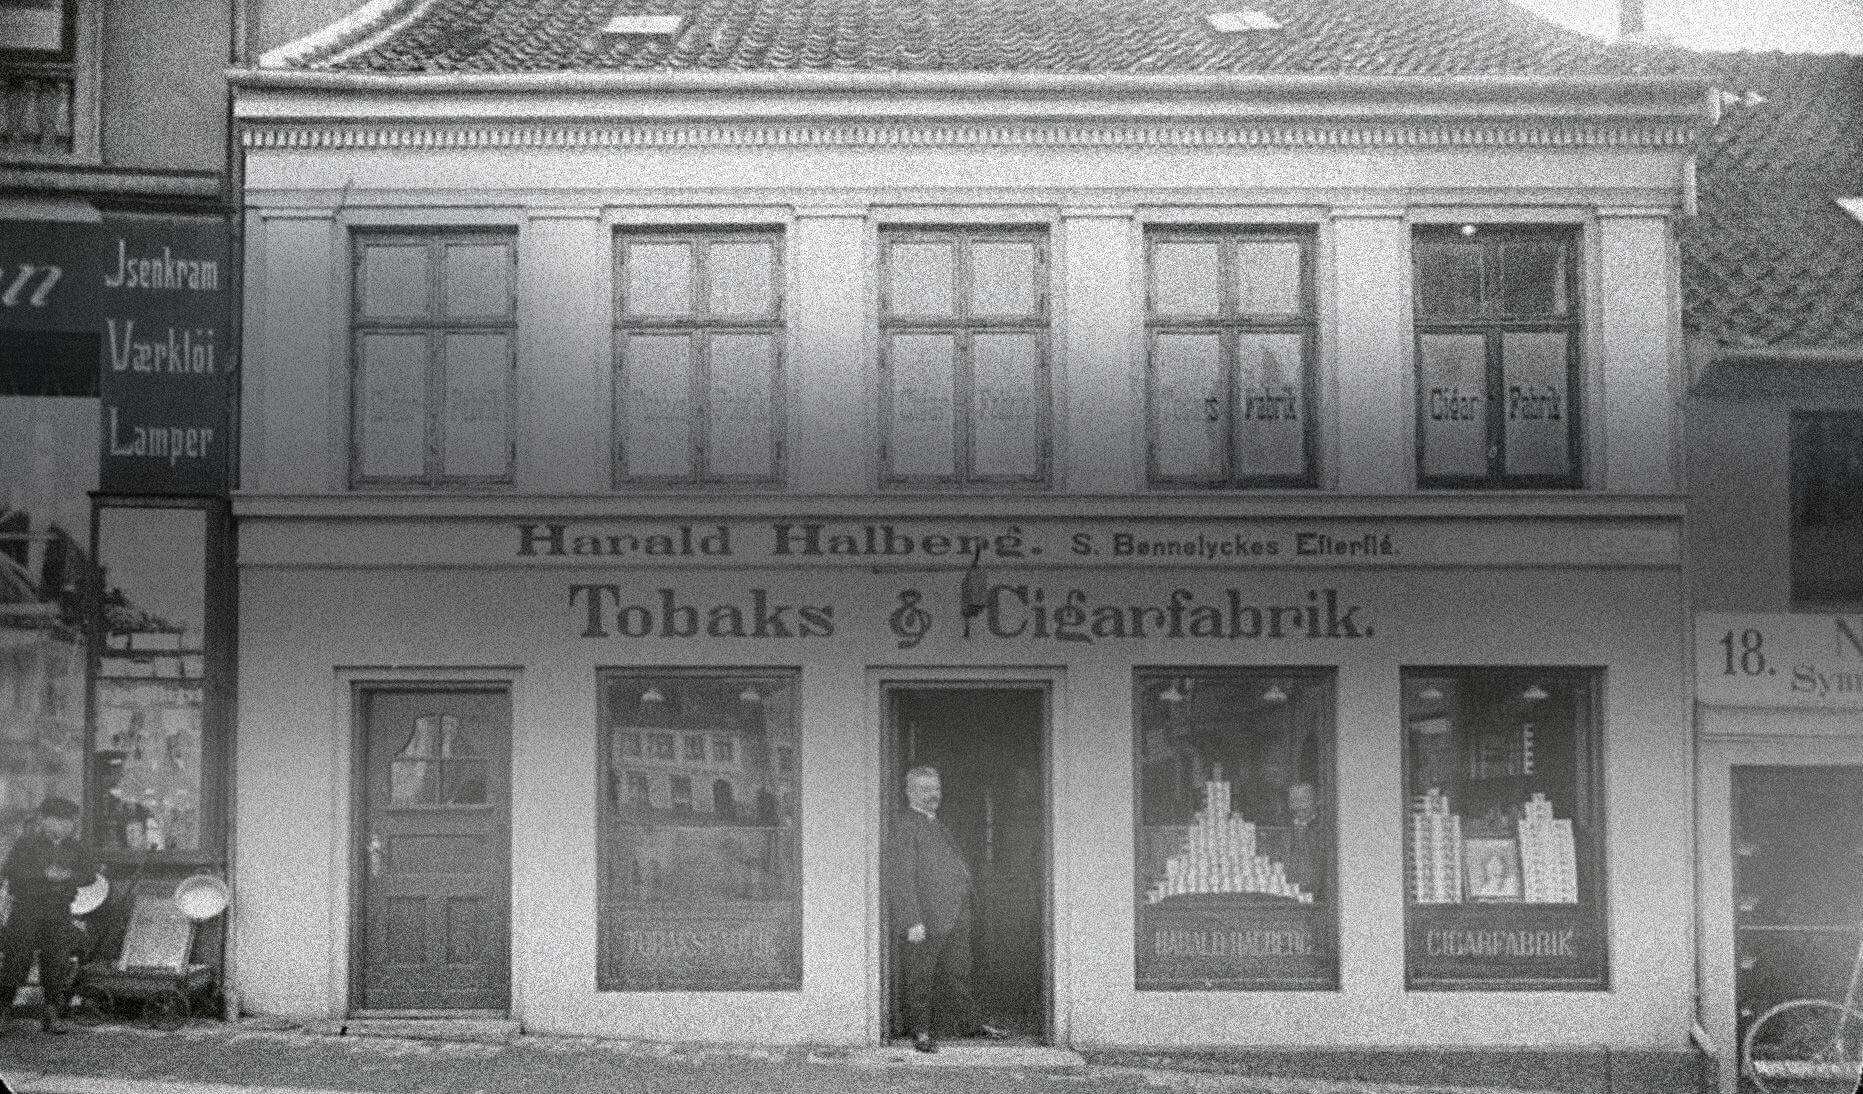 Harald Halberg - Tobaks og Cigarfabrik